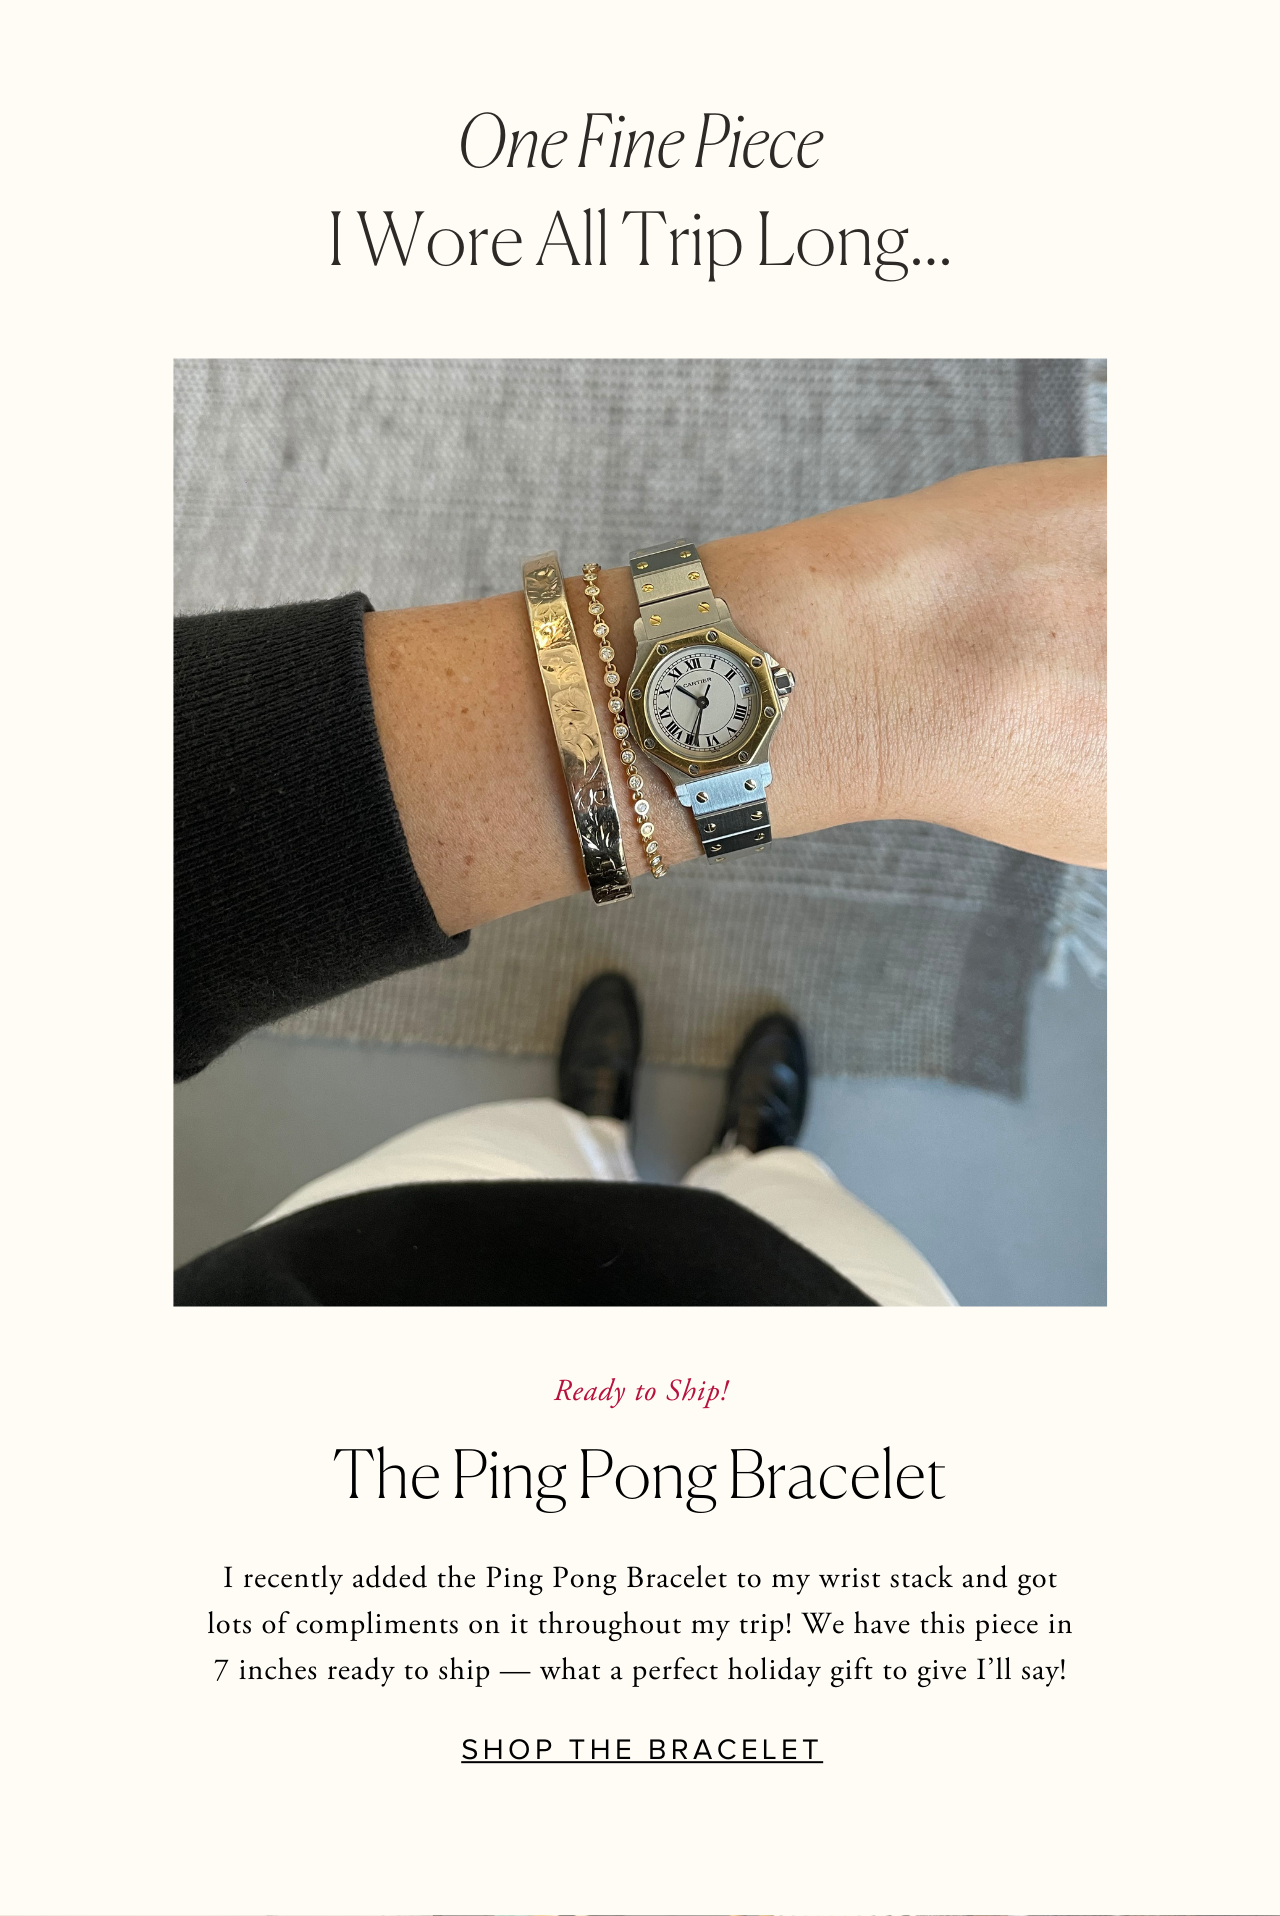 The Ping Pong Bracelet